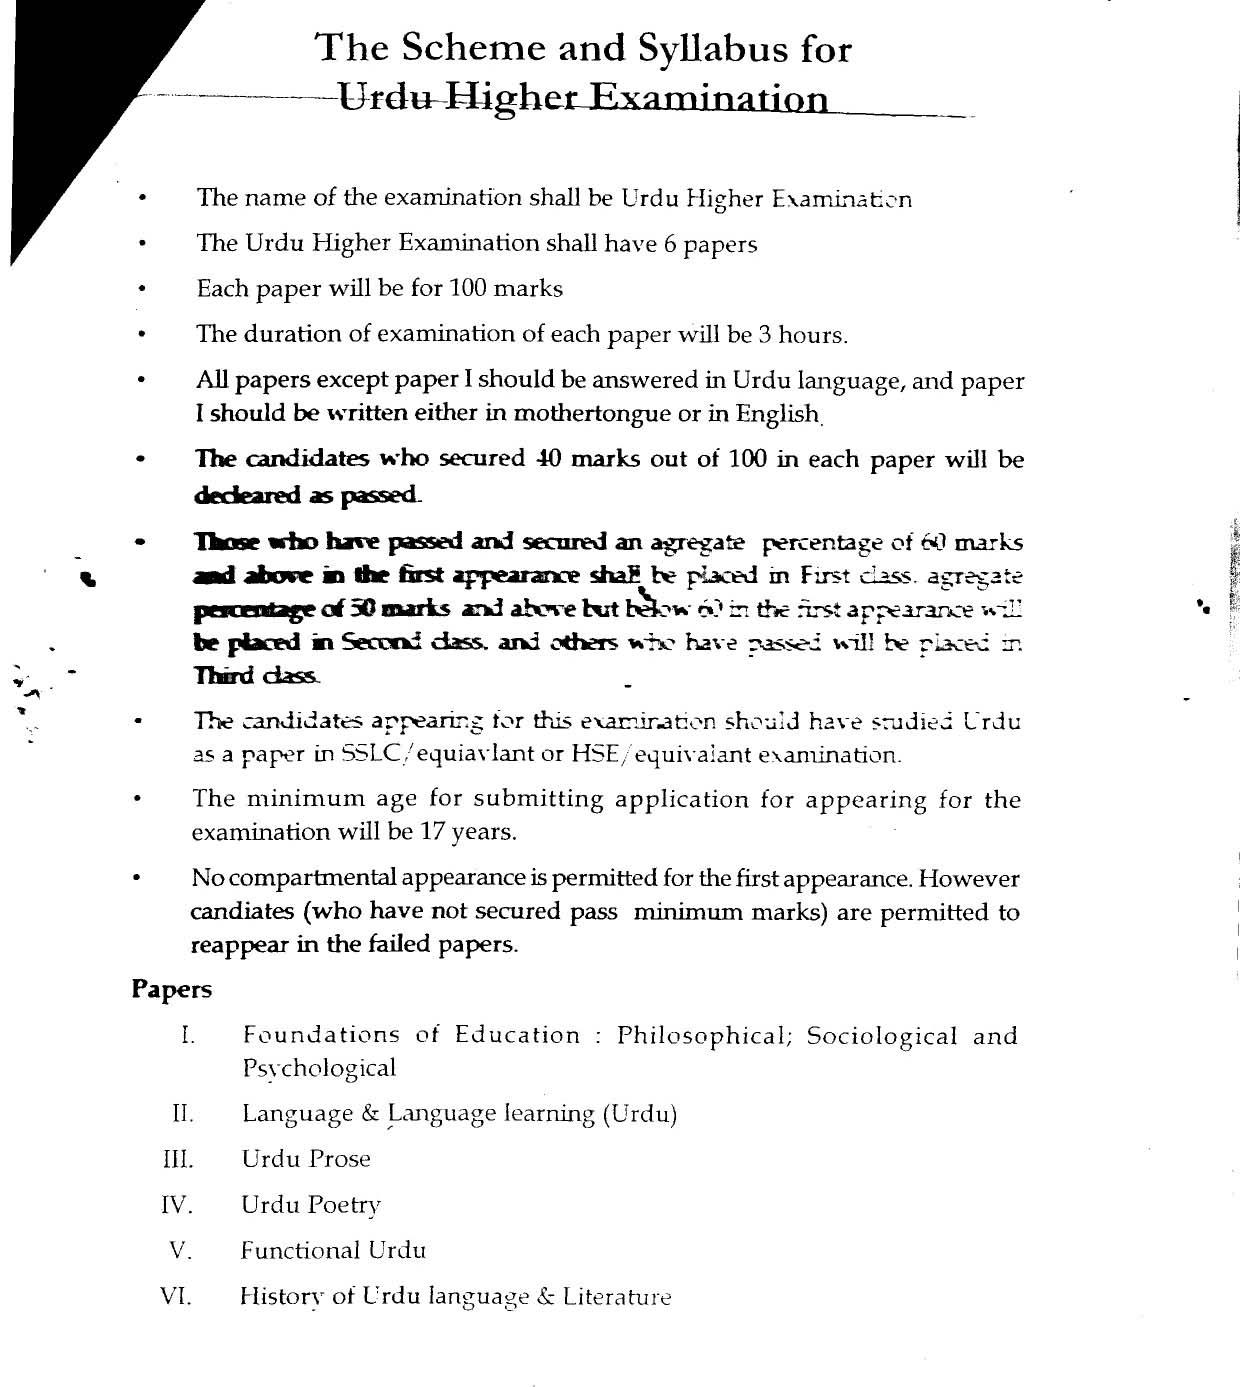 KTET Exam Syllabus for Urdu Teacher Examination of The Year 2013 1